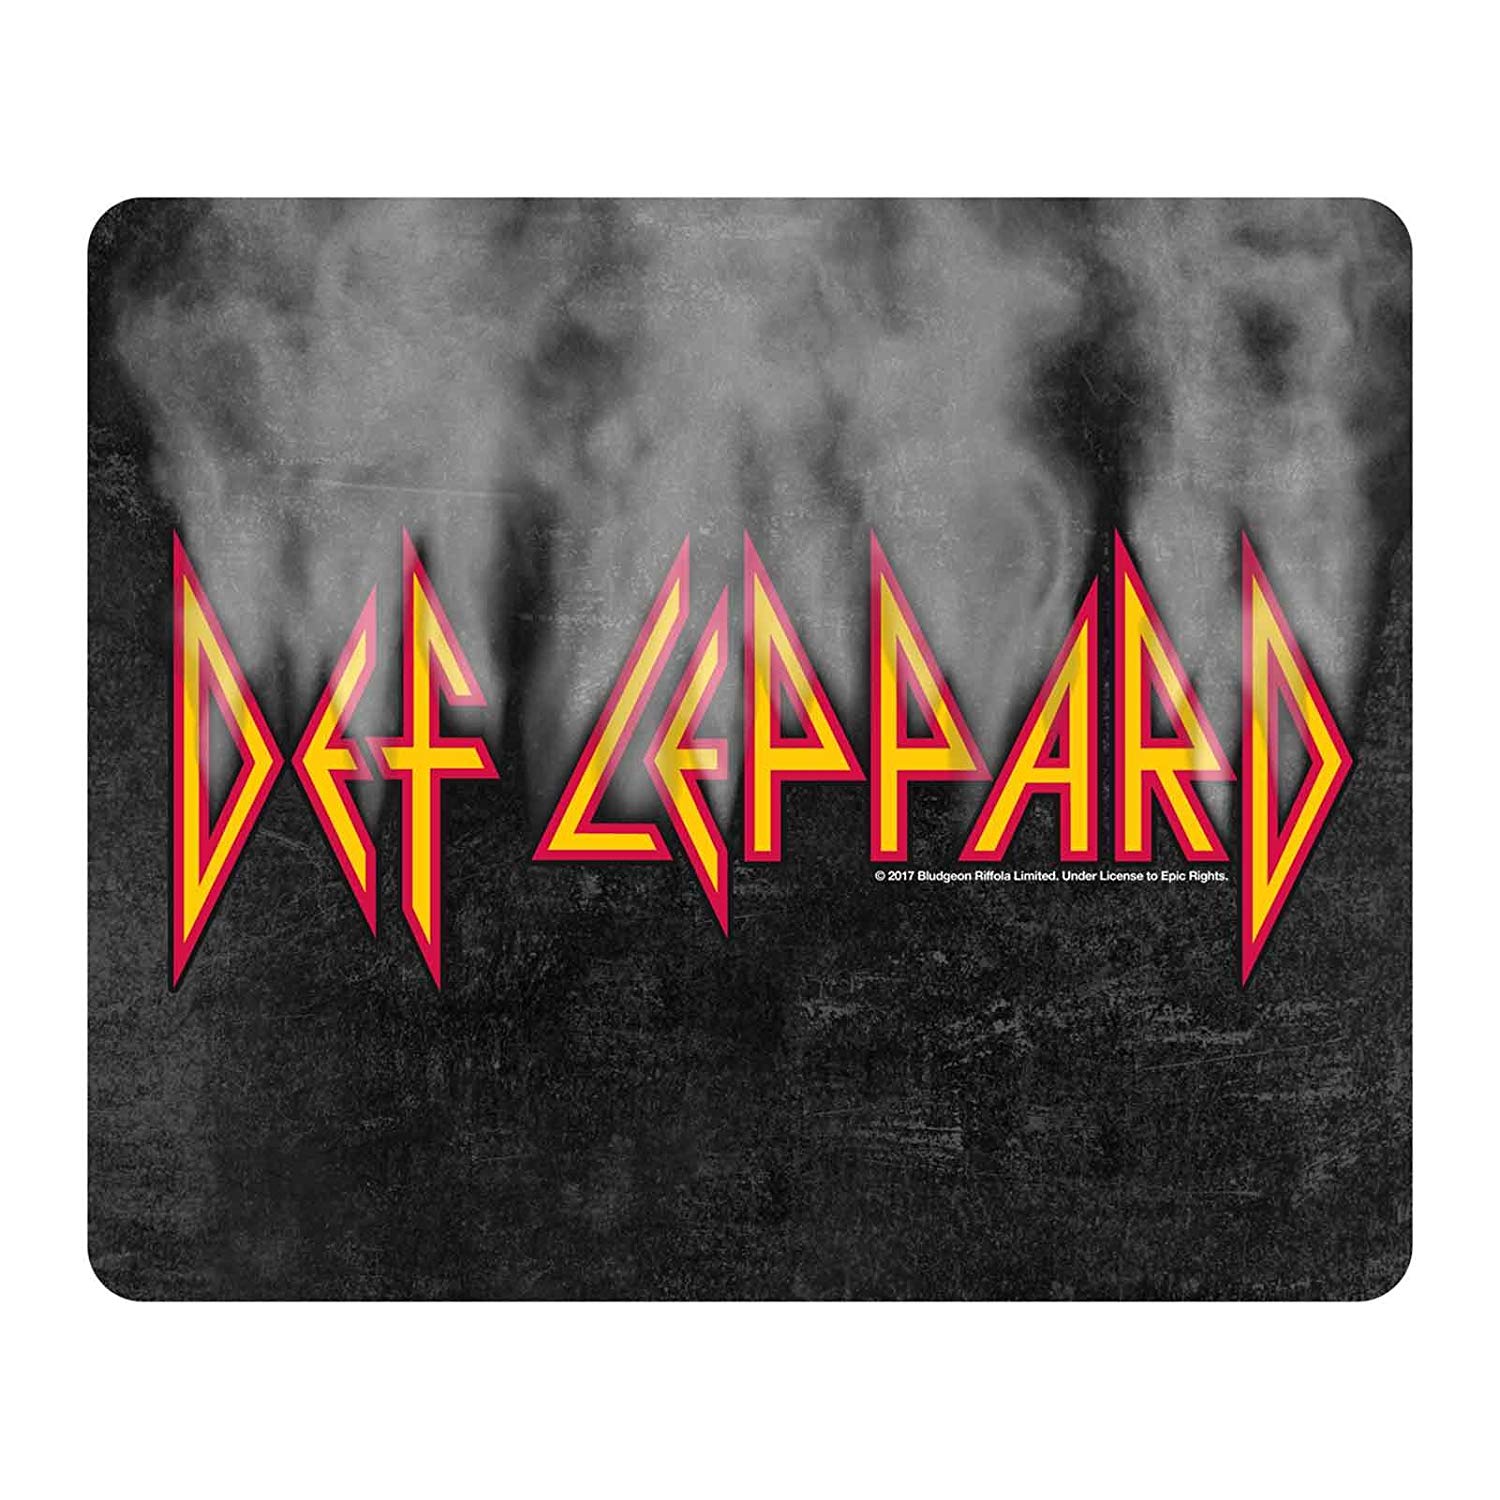 Def Leppard Band Logo - Amazon.com : Def Leppard Mouse Mat Pad Smoke Band Logo Official ...